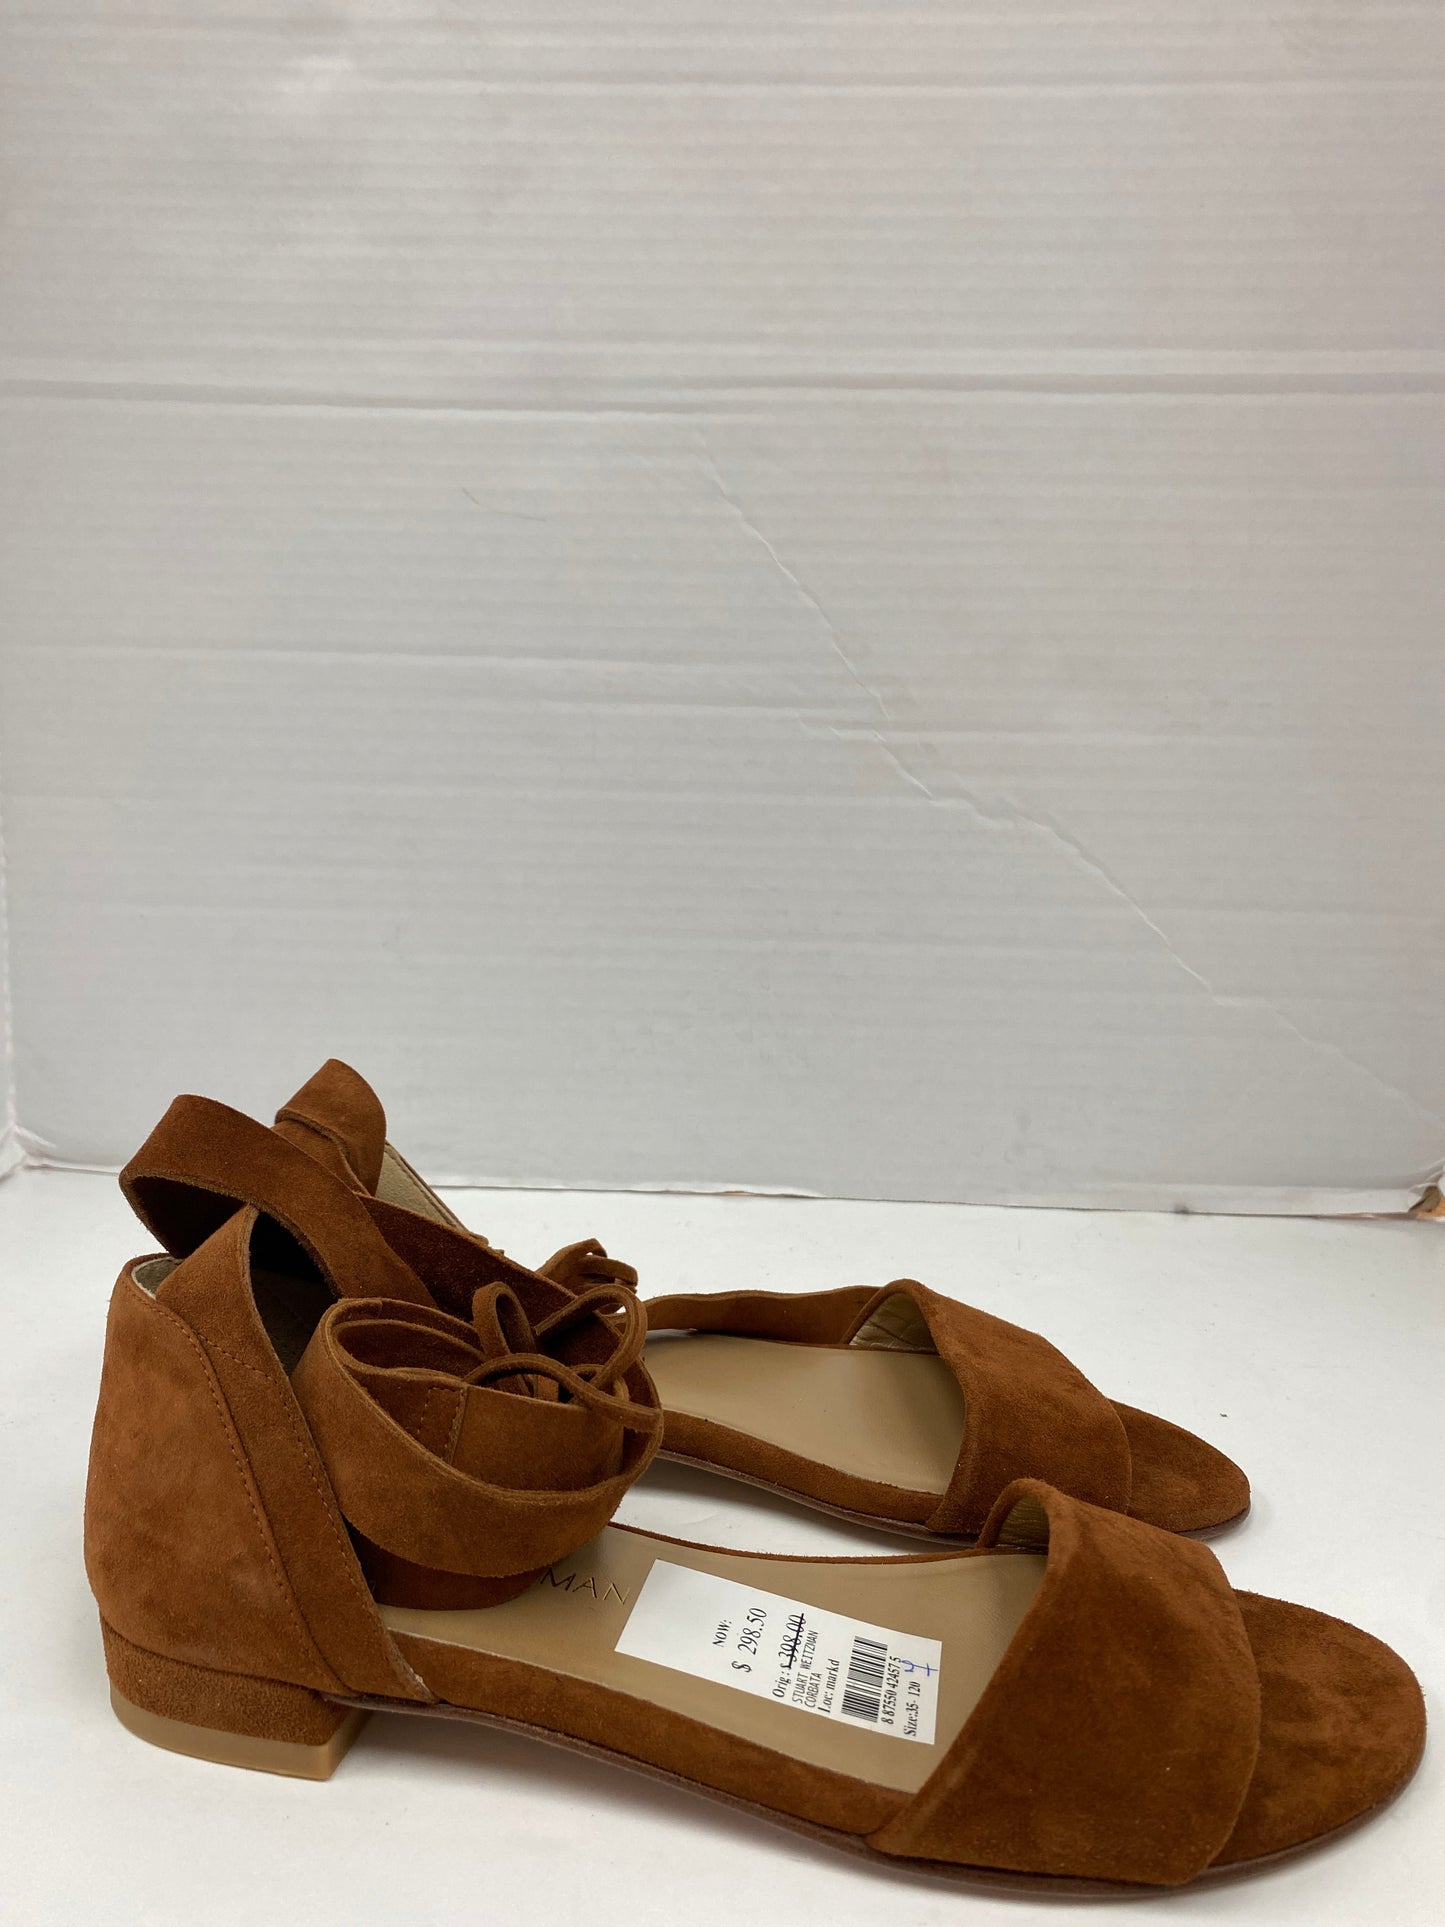 Sandals Flats By Stuart Weitzman  Size: 7